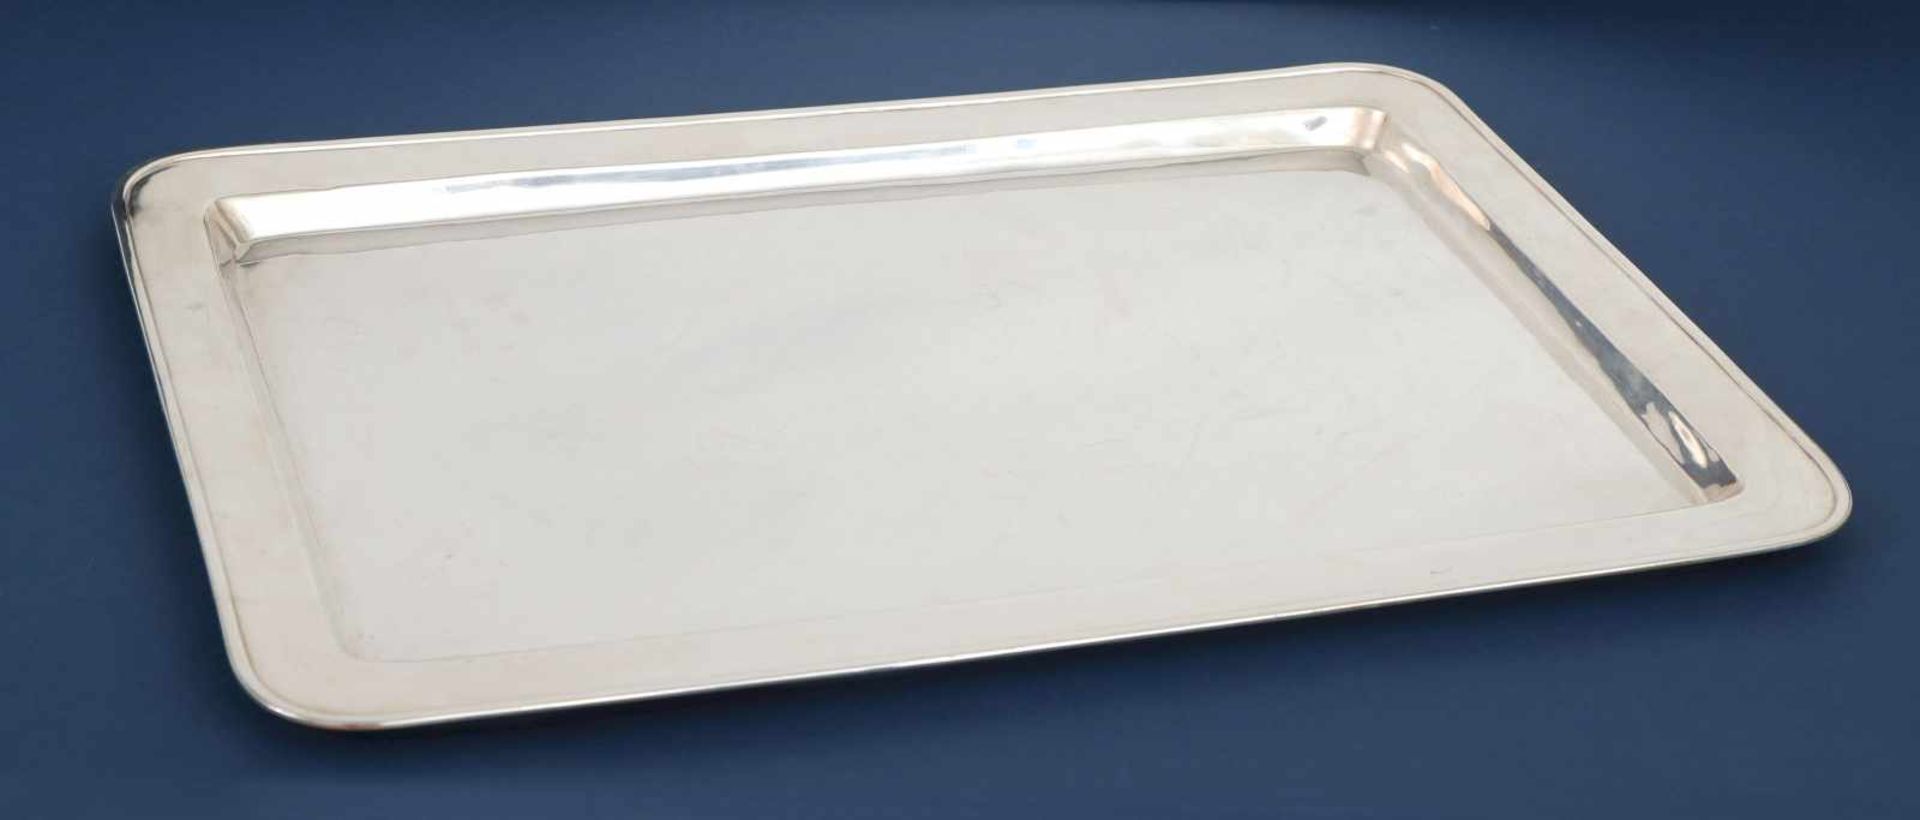 Silber TablettSterling, Lebolt & Company, Chicago, eckiges Tablett mit ansteigendem Rand und